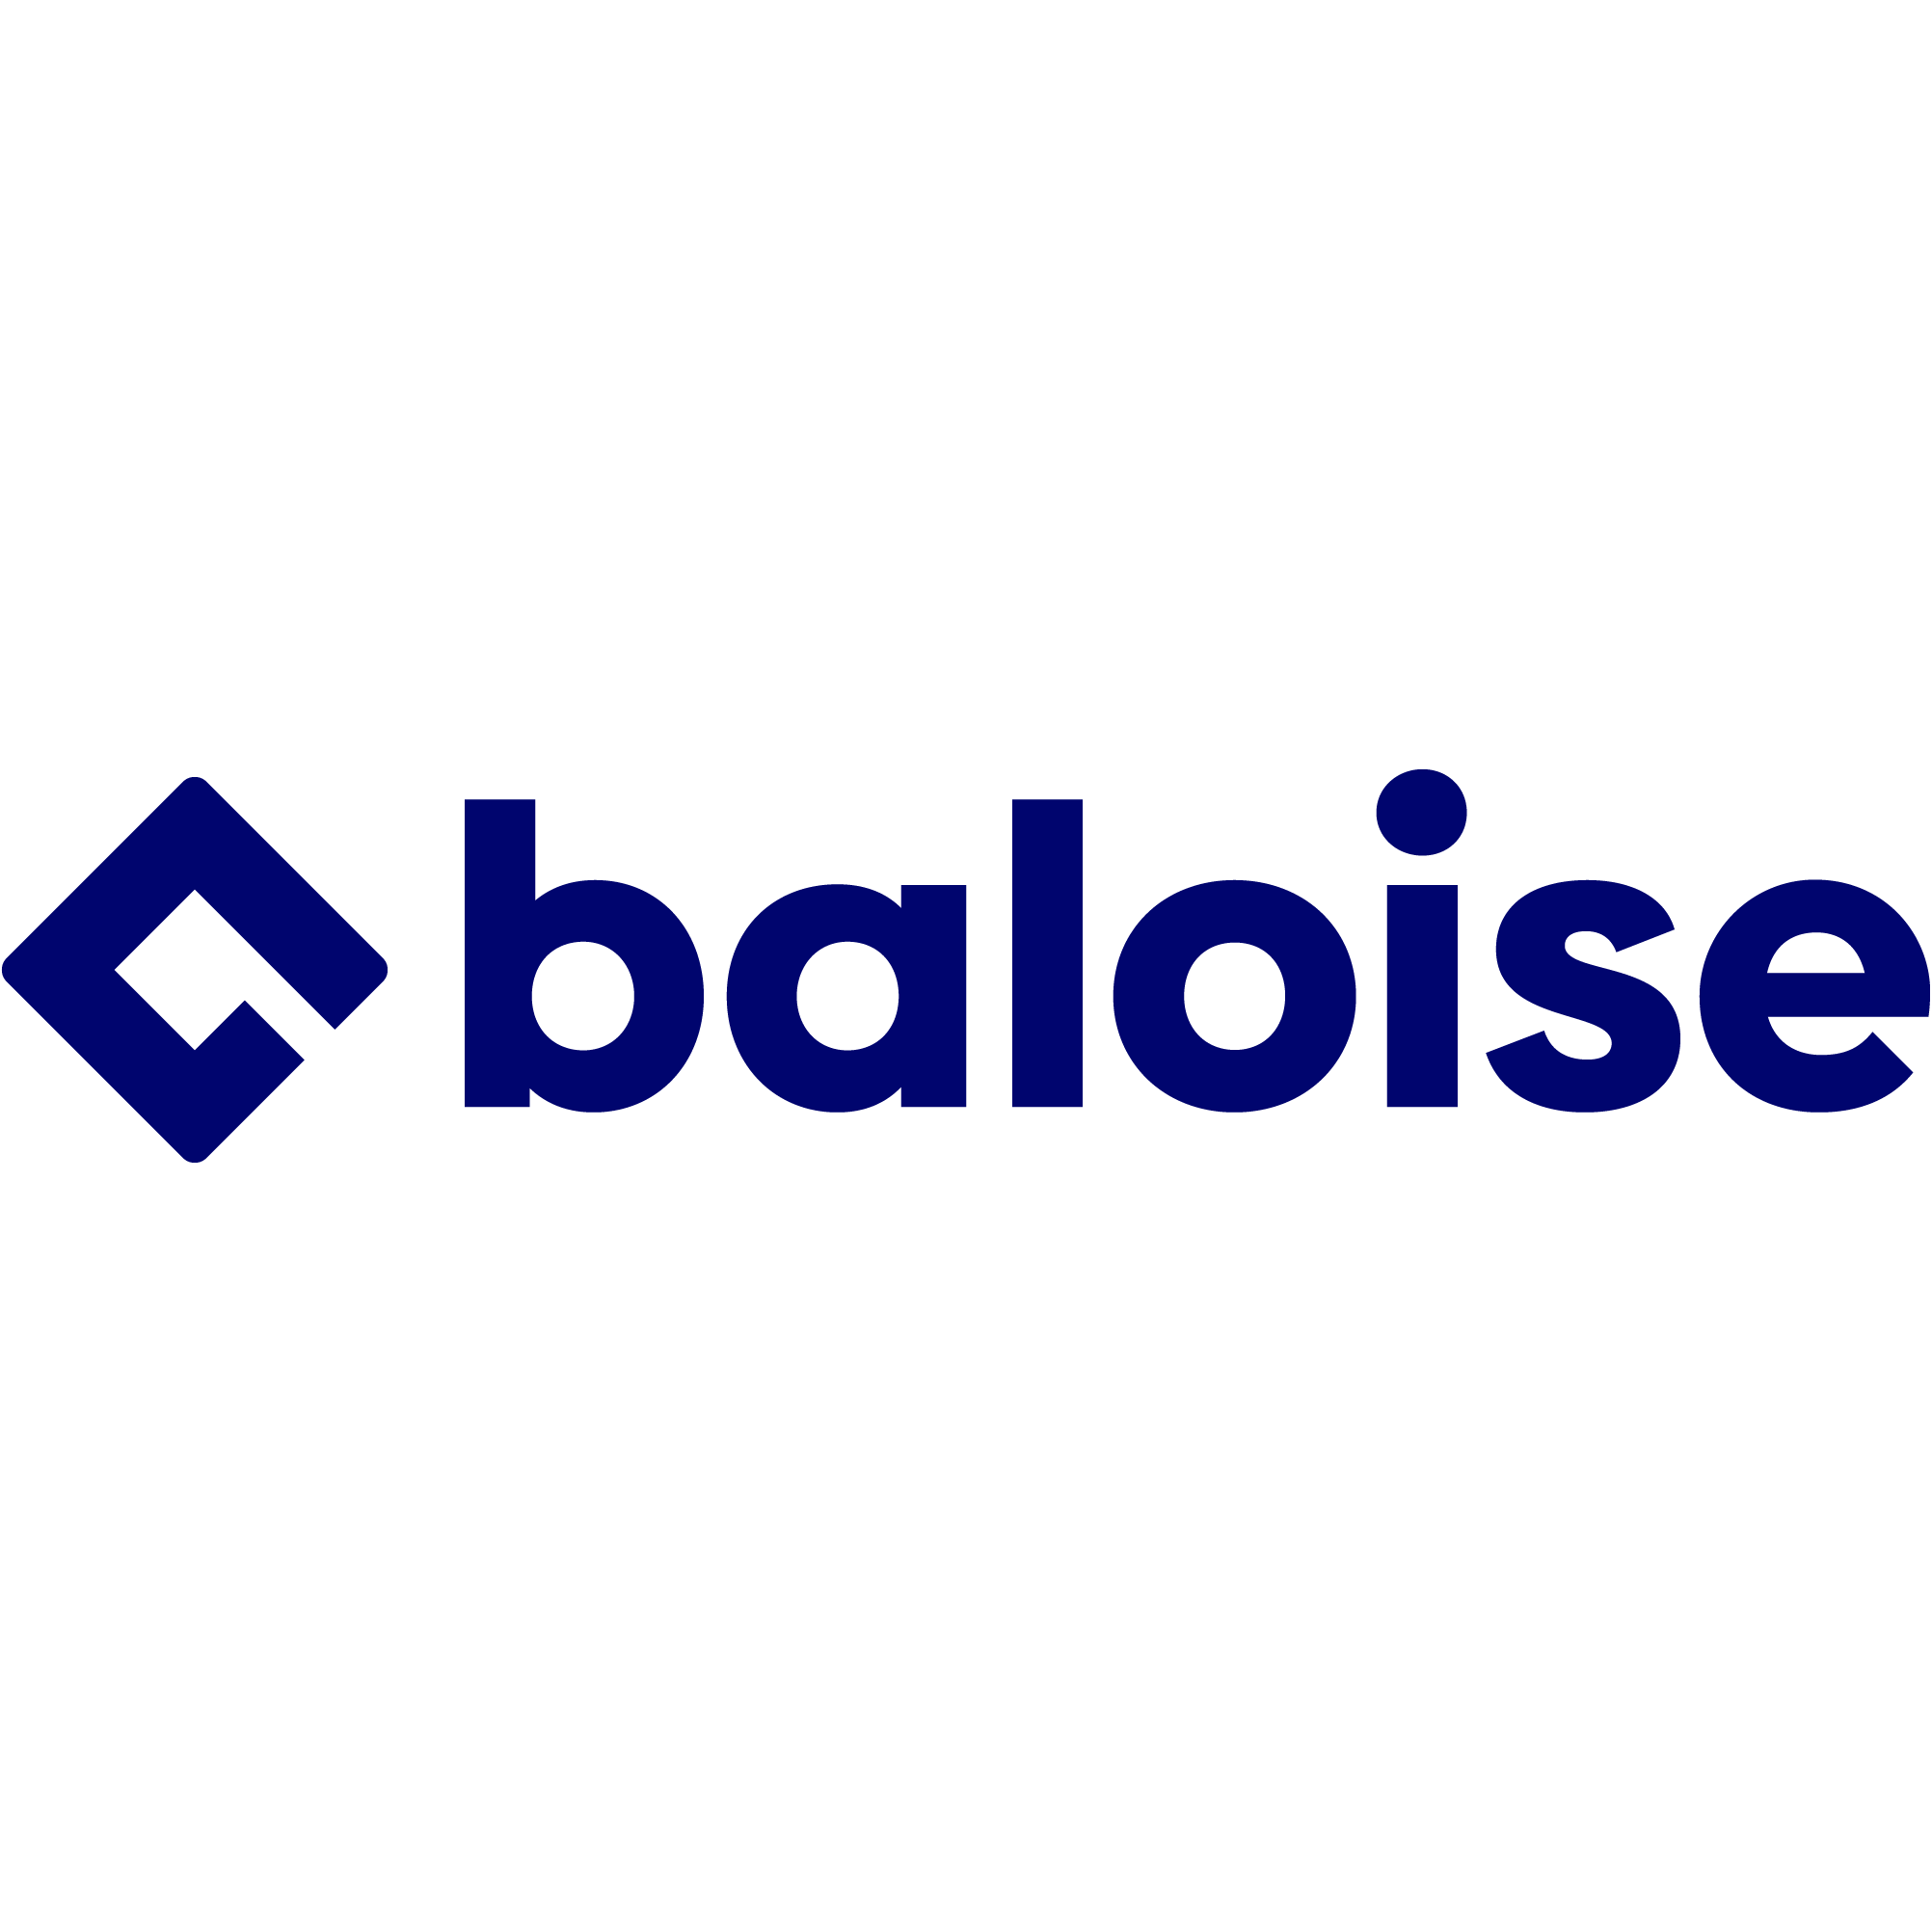 Baloise - Generalagentur Ralph Thomas Pieper in Herne in Herne - Logo